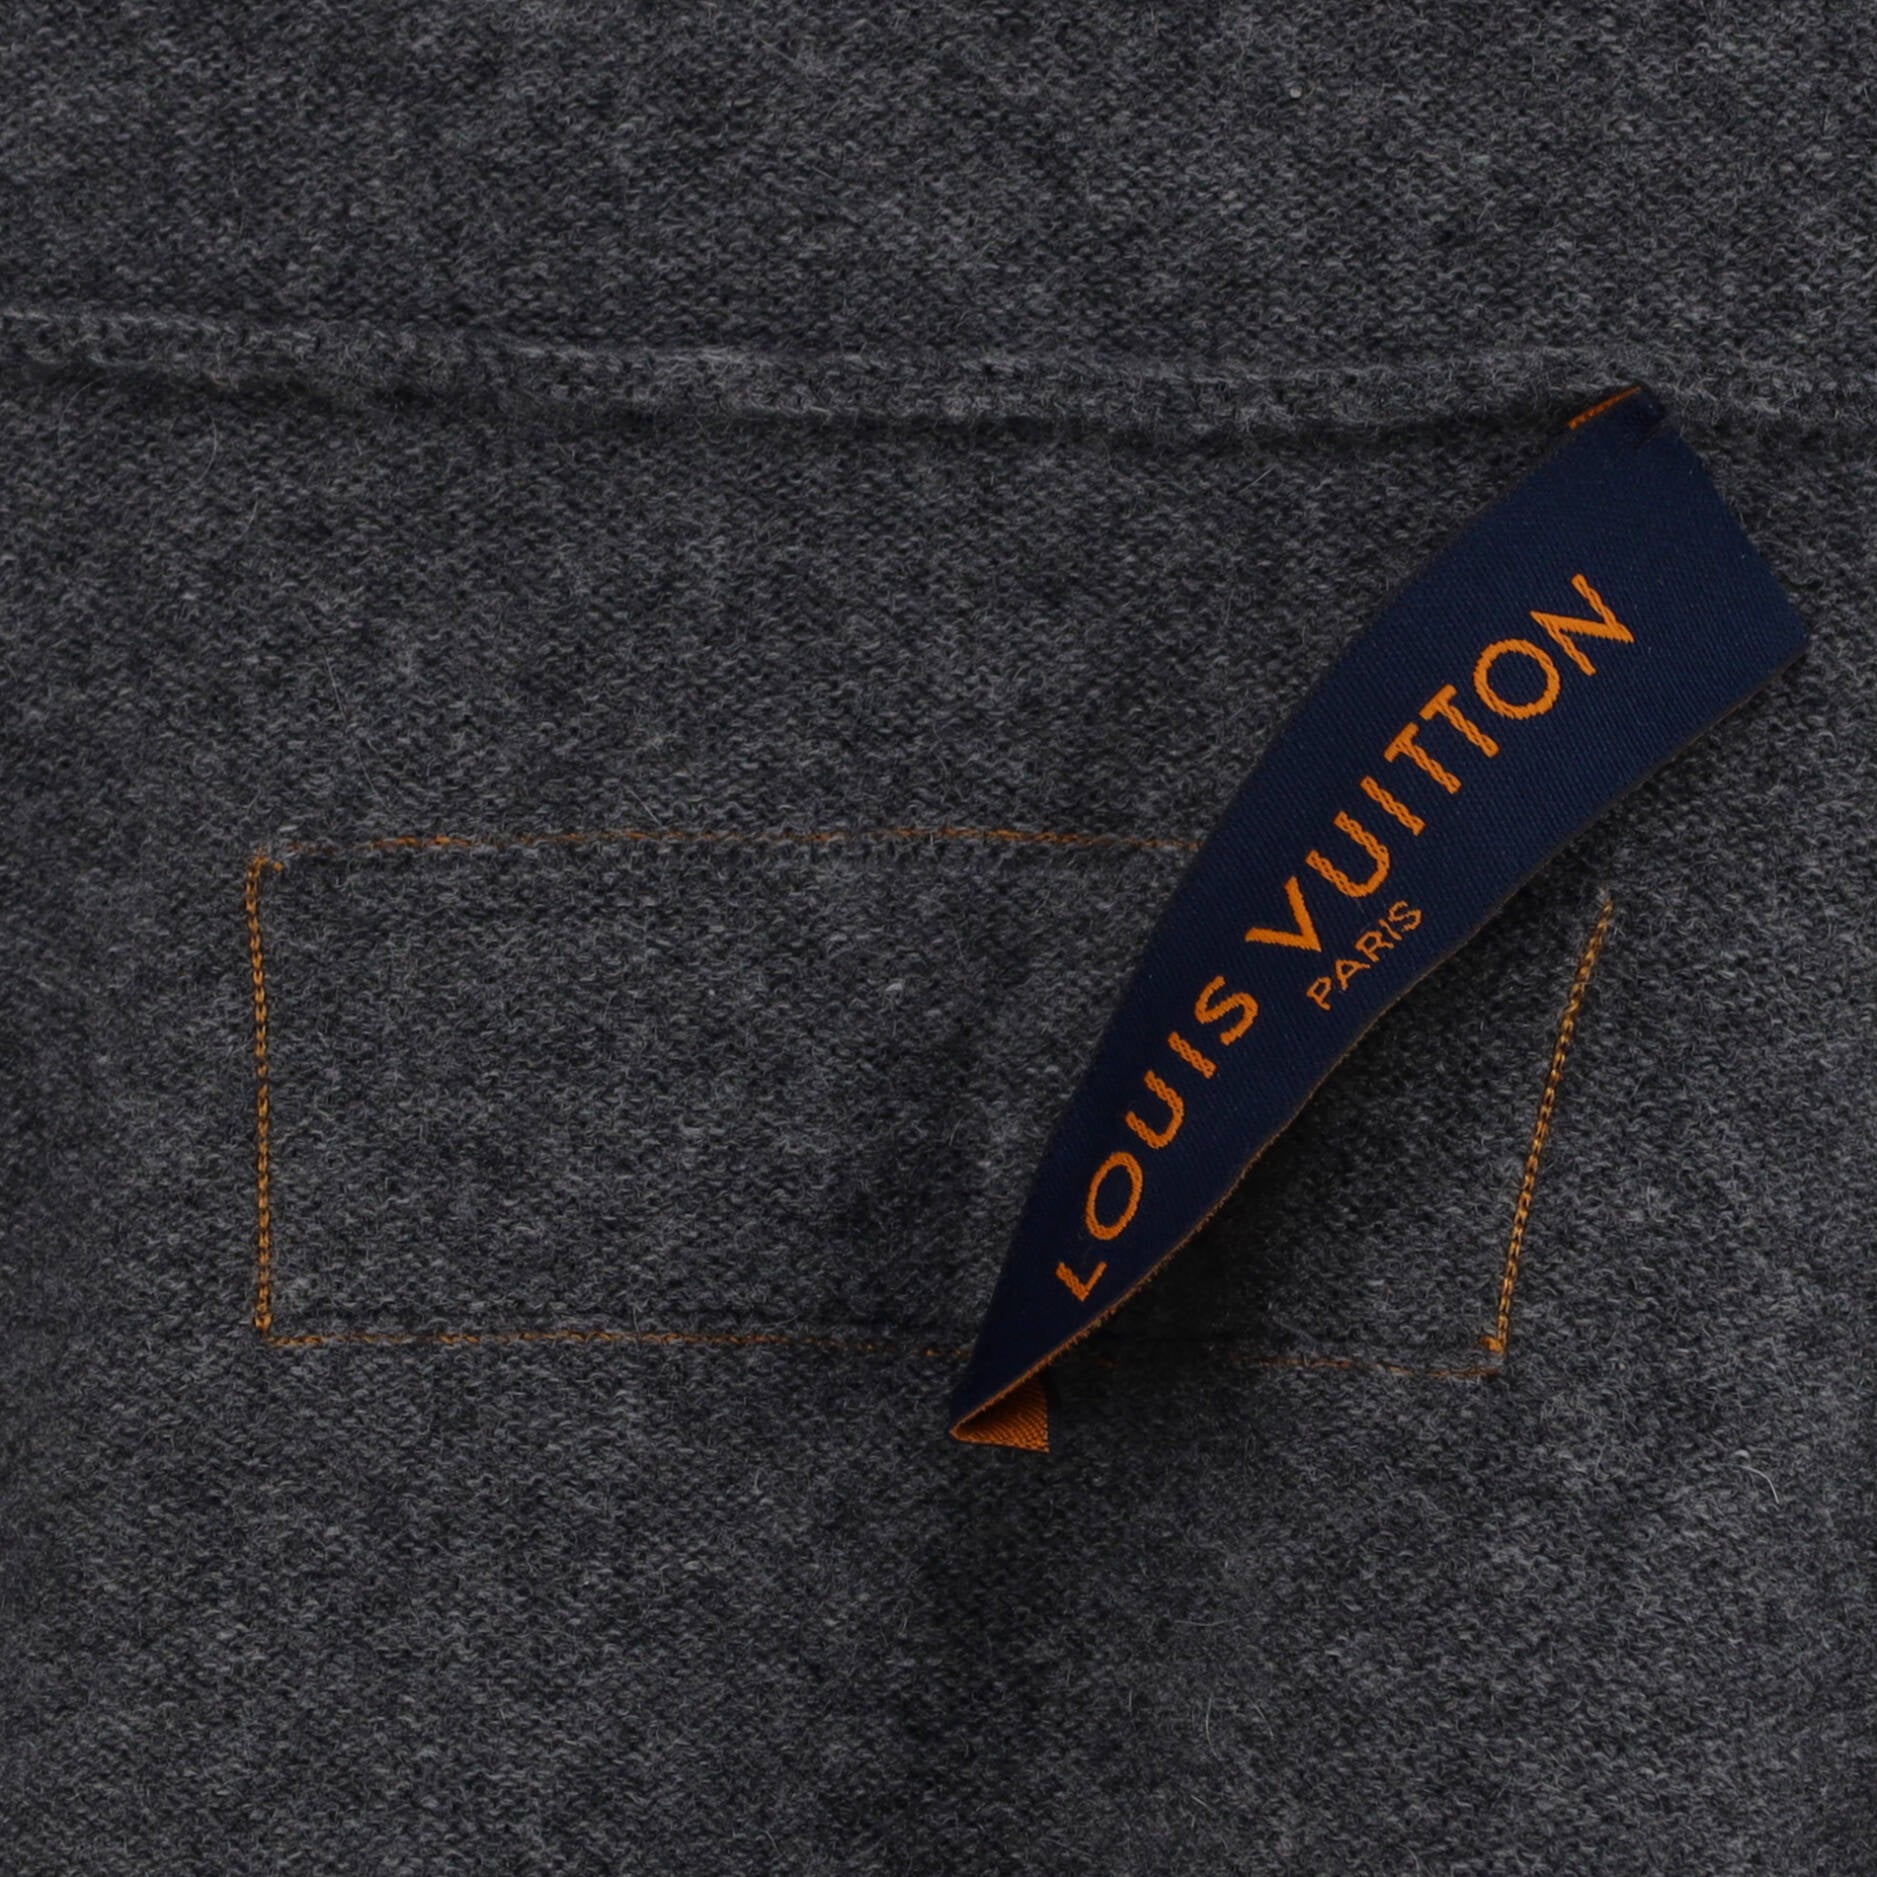 Louis Vuitton Men's Cream Cashmere Half and Half Monogram Crewneck